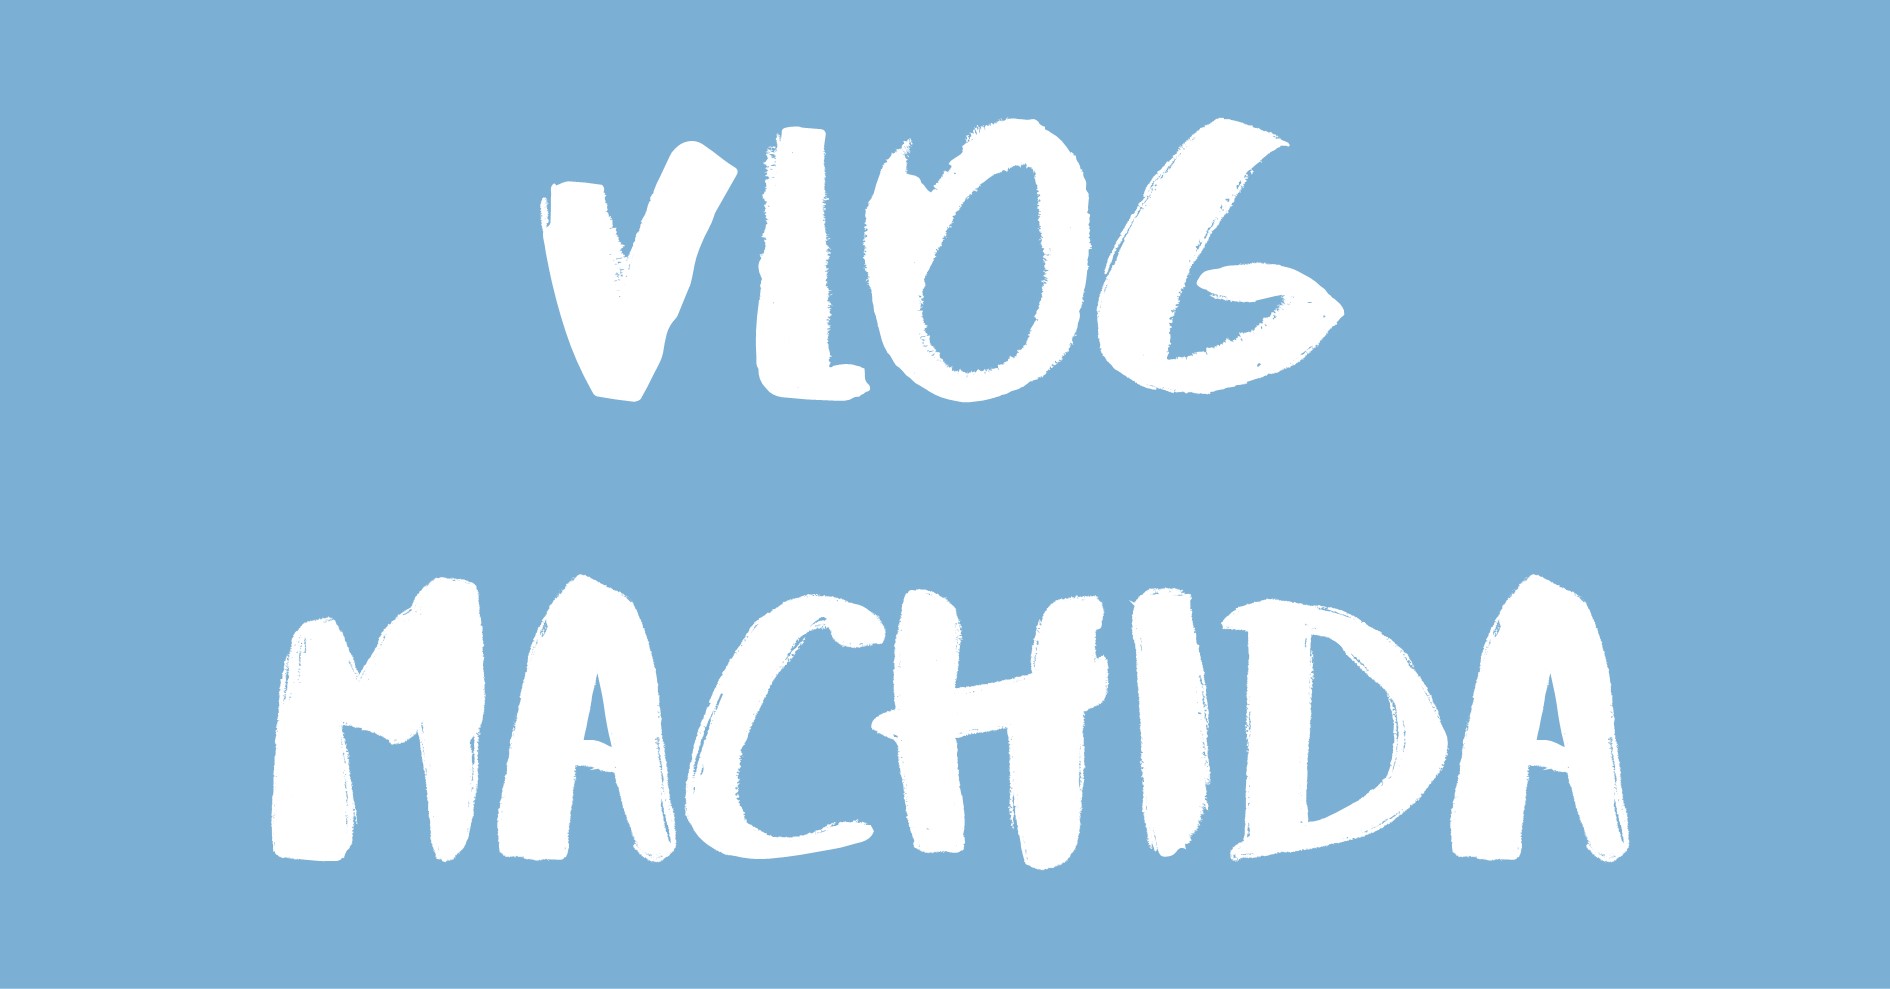 Vlog Machida